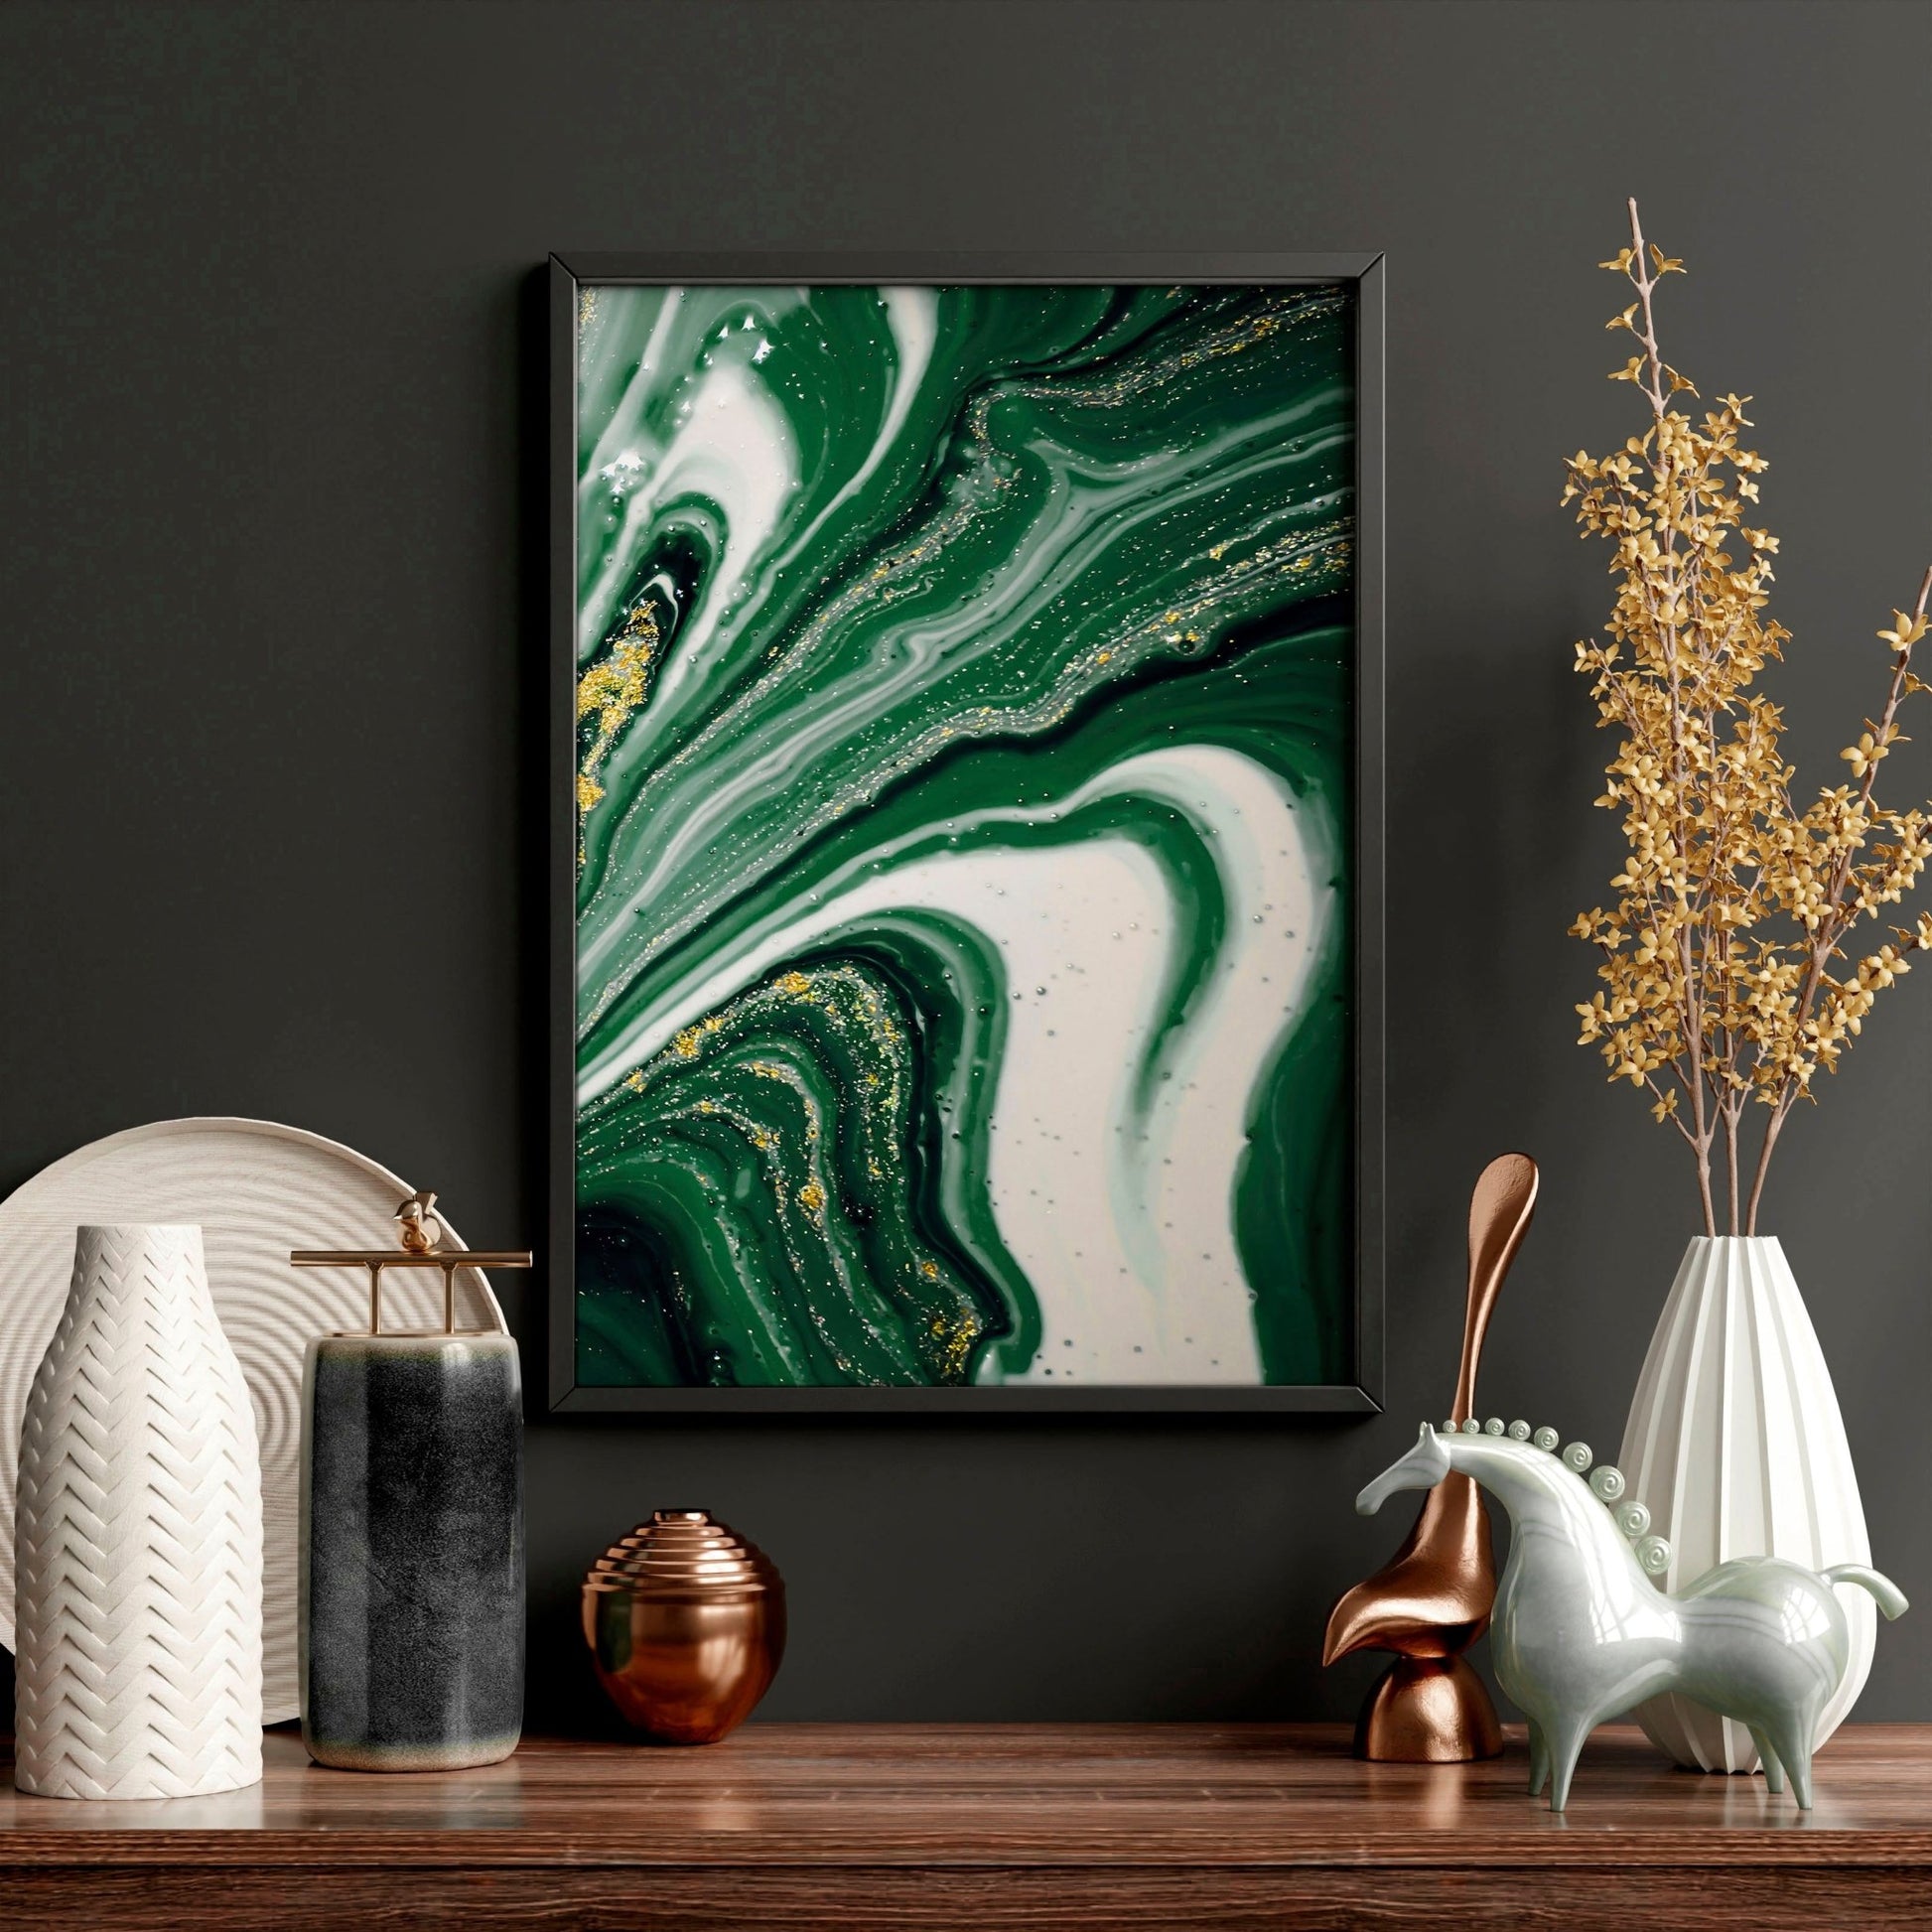 Sage Green wall abstract art | set of 3 wall art prints - About Wall Art